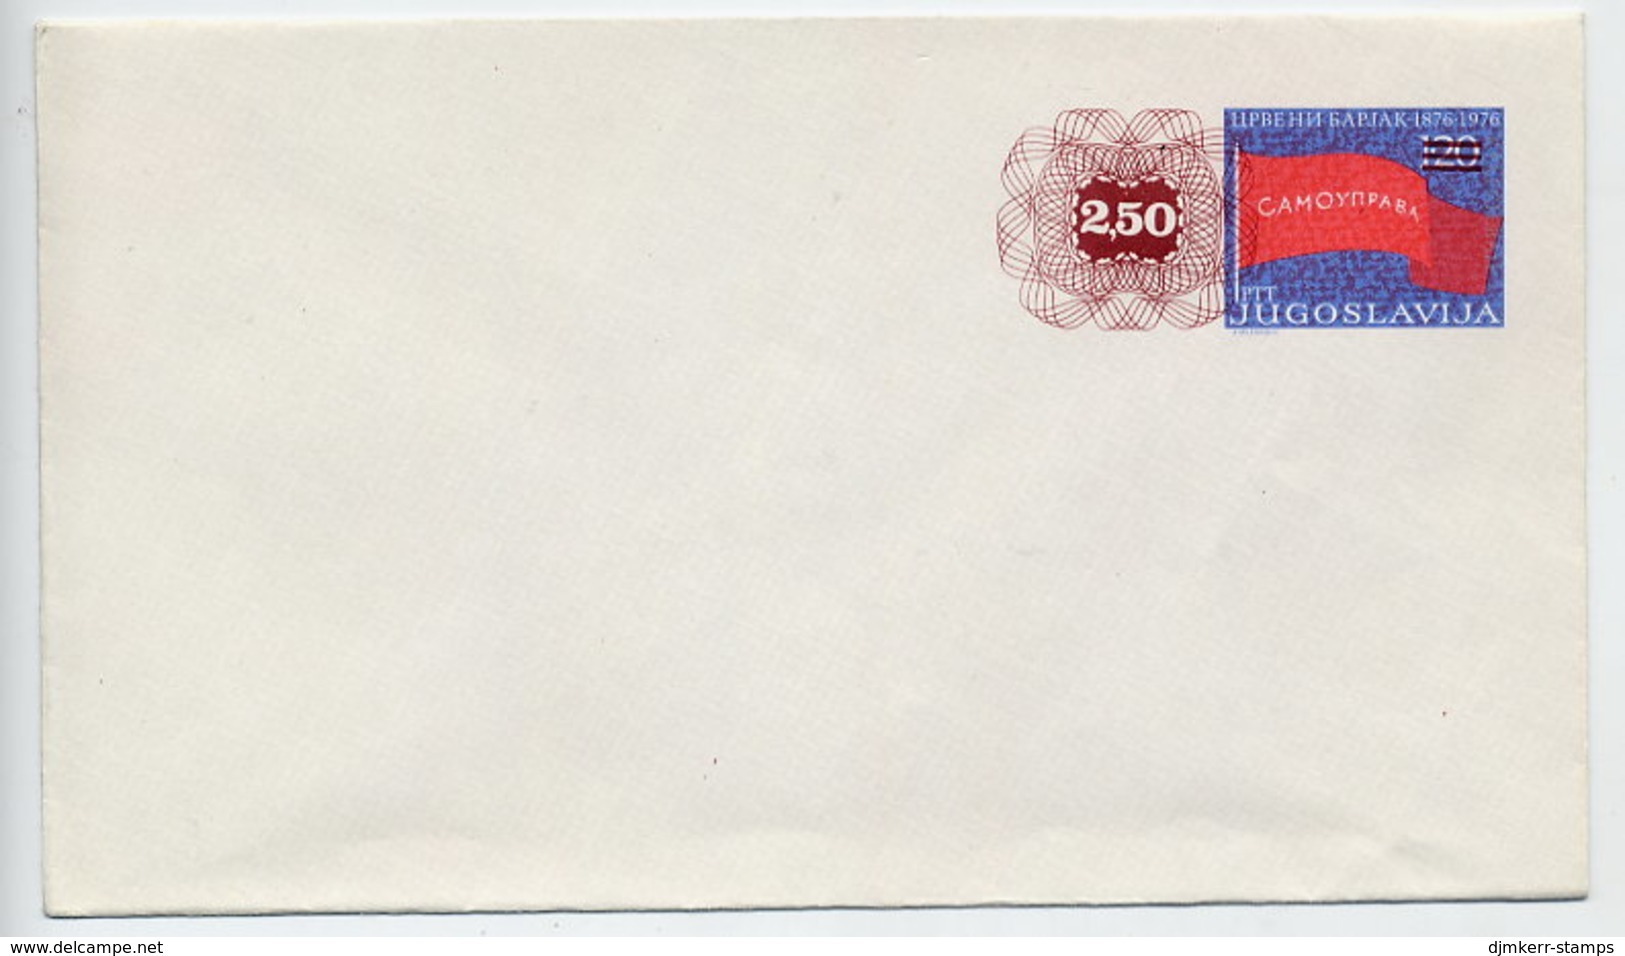 YUGOSLAVIA 1980 2.50 Surcharge On Red Flag Centenary Envelope Unused. Michel U87 II - Entiers Postaux